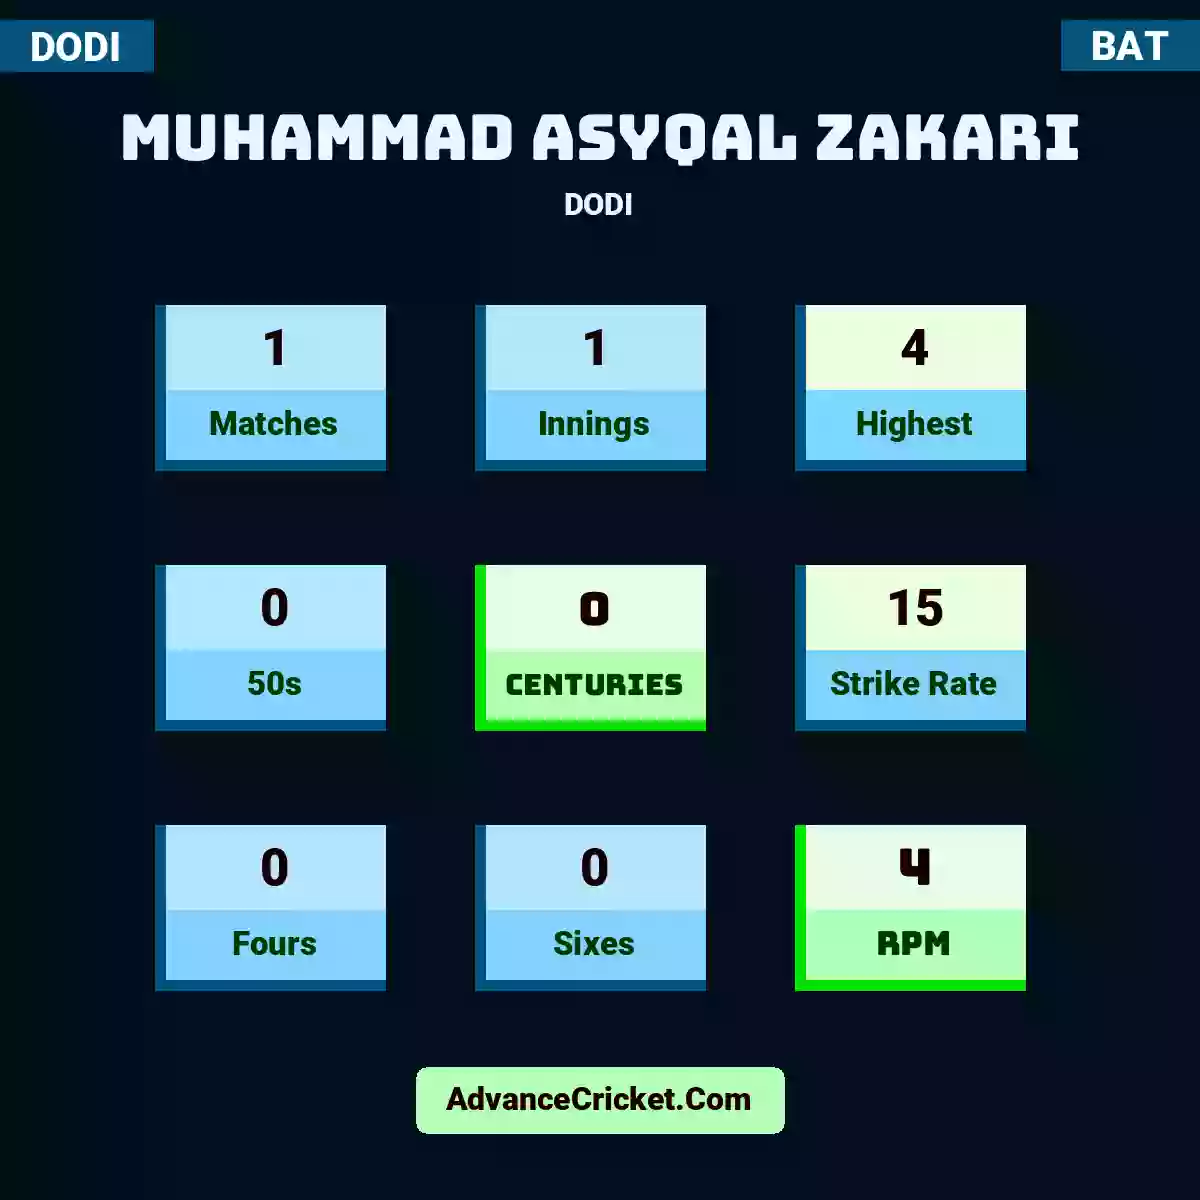 Muhammad Asyqal Zakari DODI , Muhammad Asyqal Zakari played 1 matches, scored 4 runs as highest, 0 half-centuries, and 0 centuries, with a strike rate of 15. M.Asyqal.Zakari hit 0 fours and 0 sixes, with an RPM of 4.